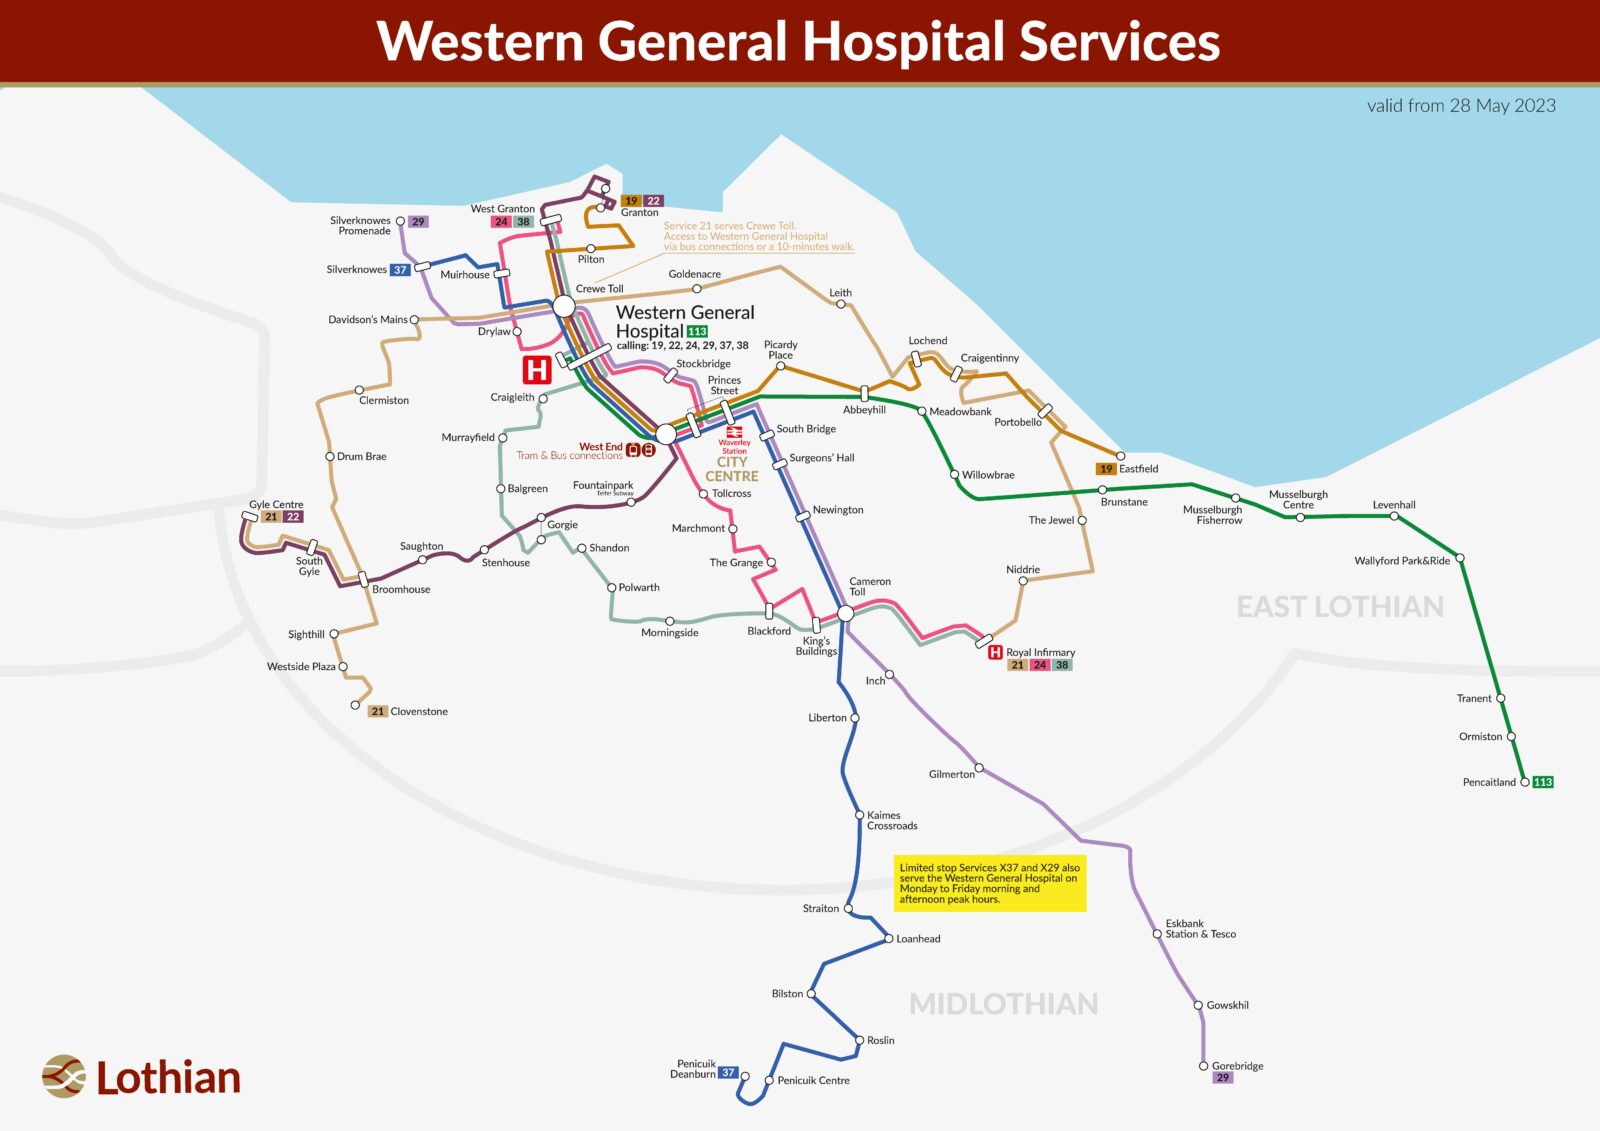 Western General Hospital Services